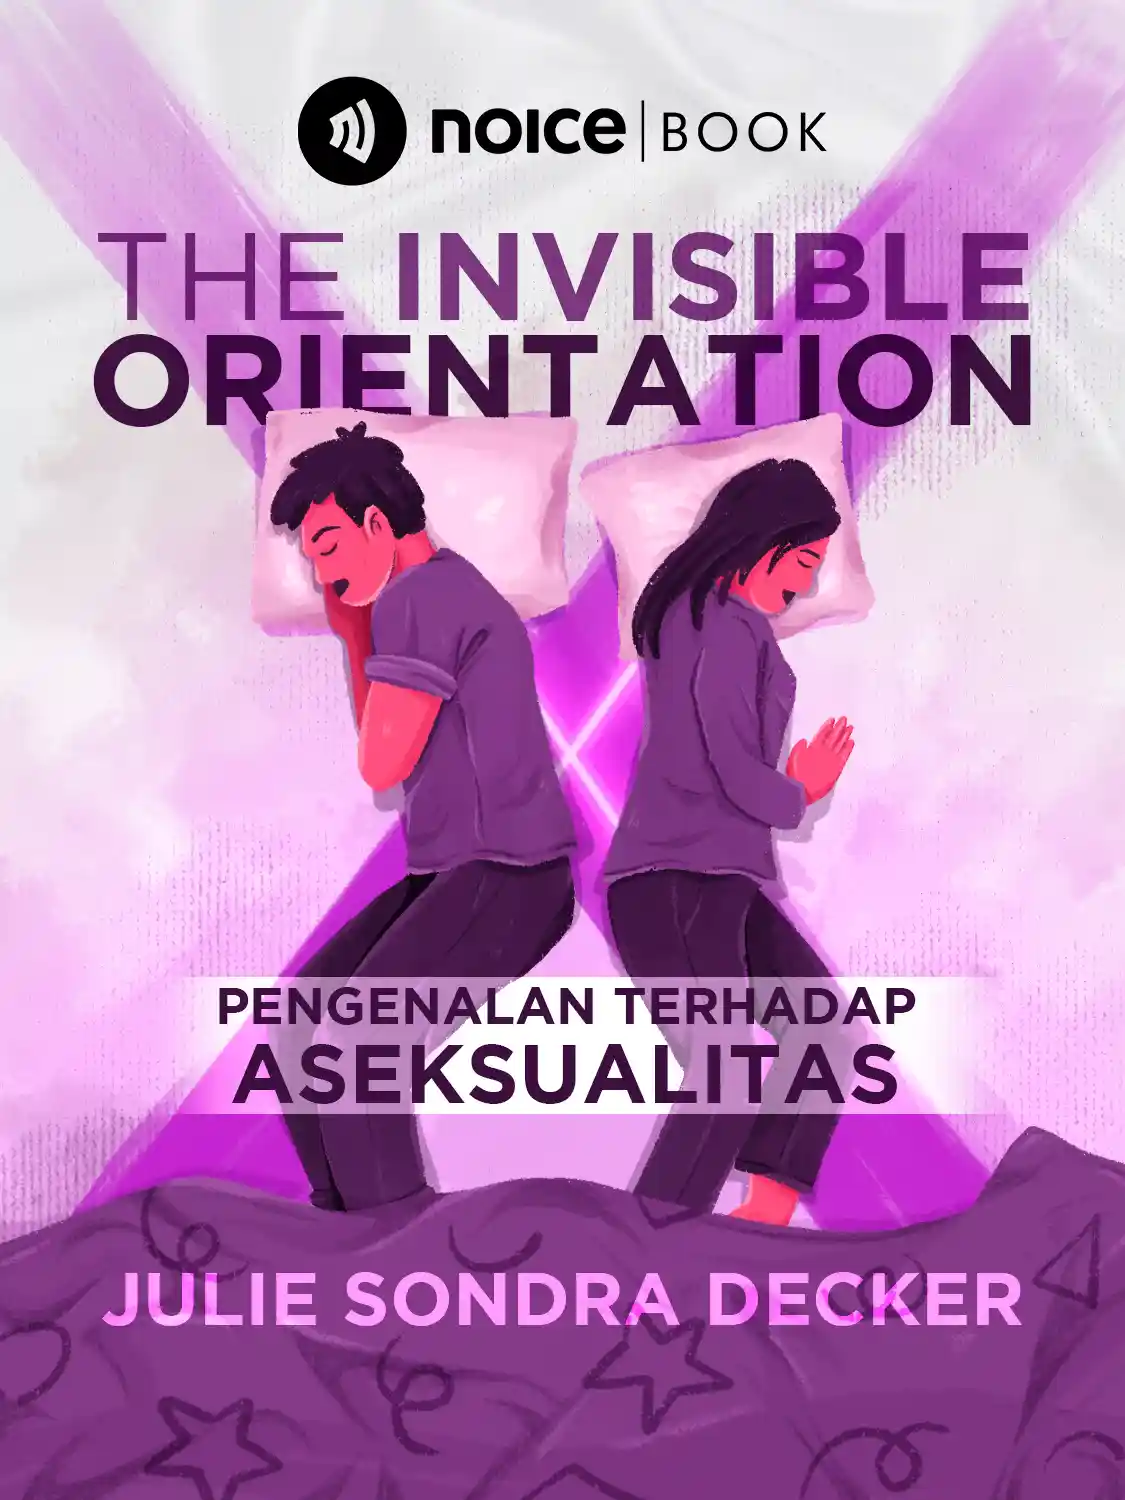 #5 Orang aseksual sering diminta untuk membuktikan kalau orientasinya nggak disebabkan oleh penyakit fisik atau mental